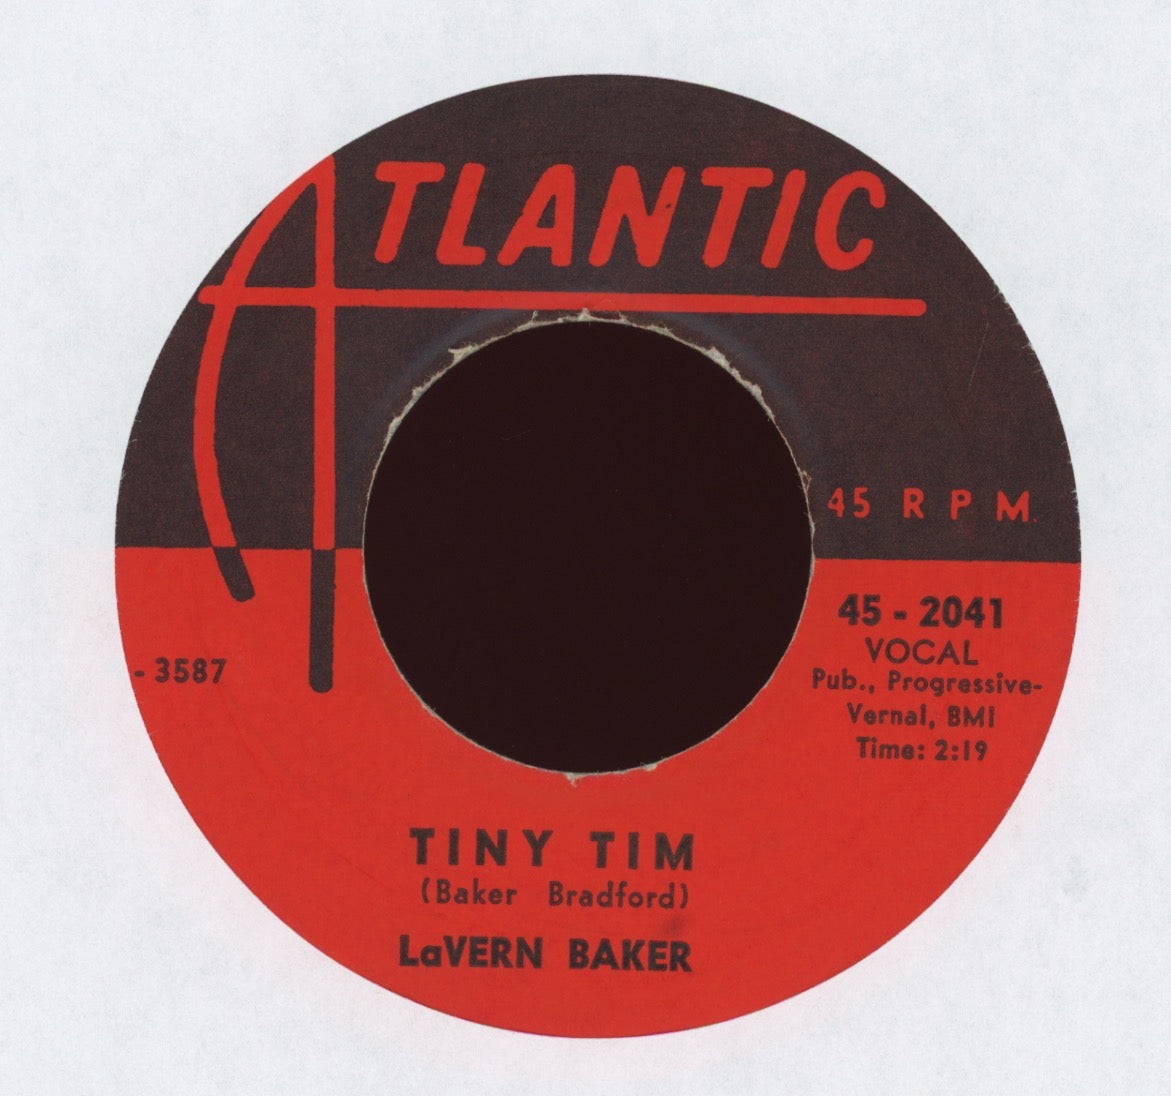 LaVern Baker - Tiny Tim on Atlantic R&B 45